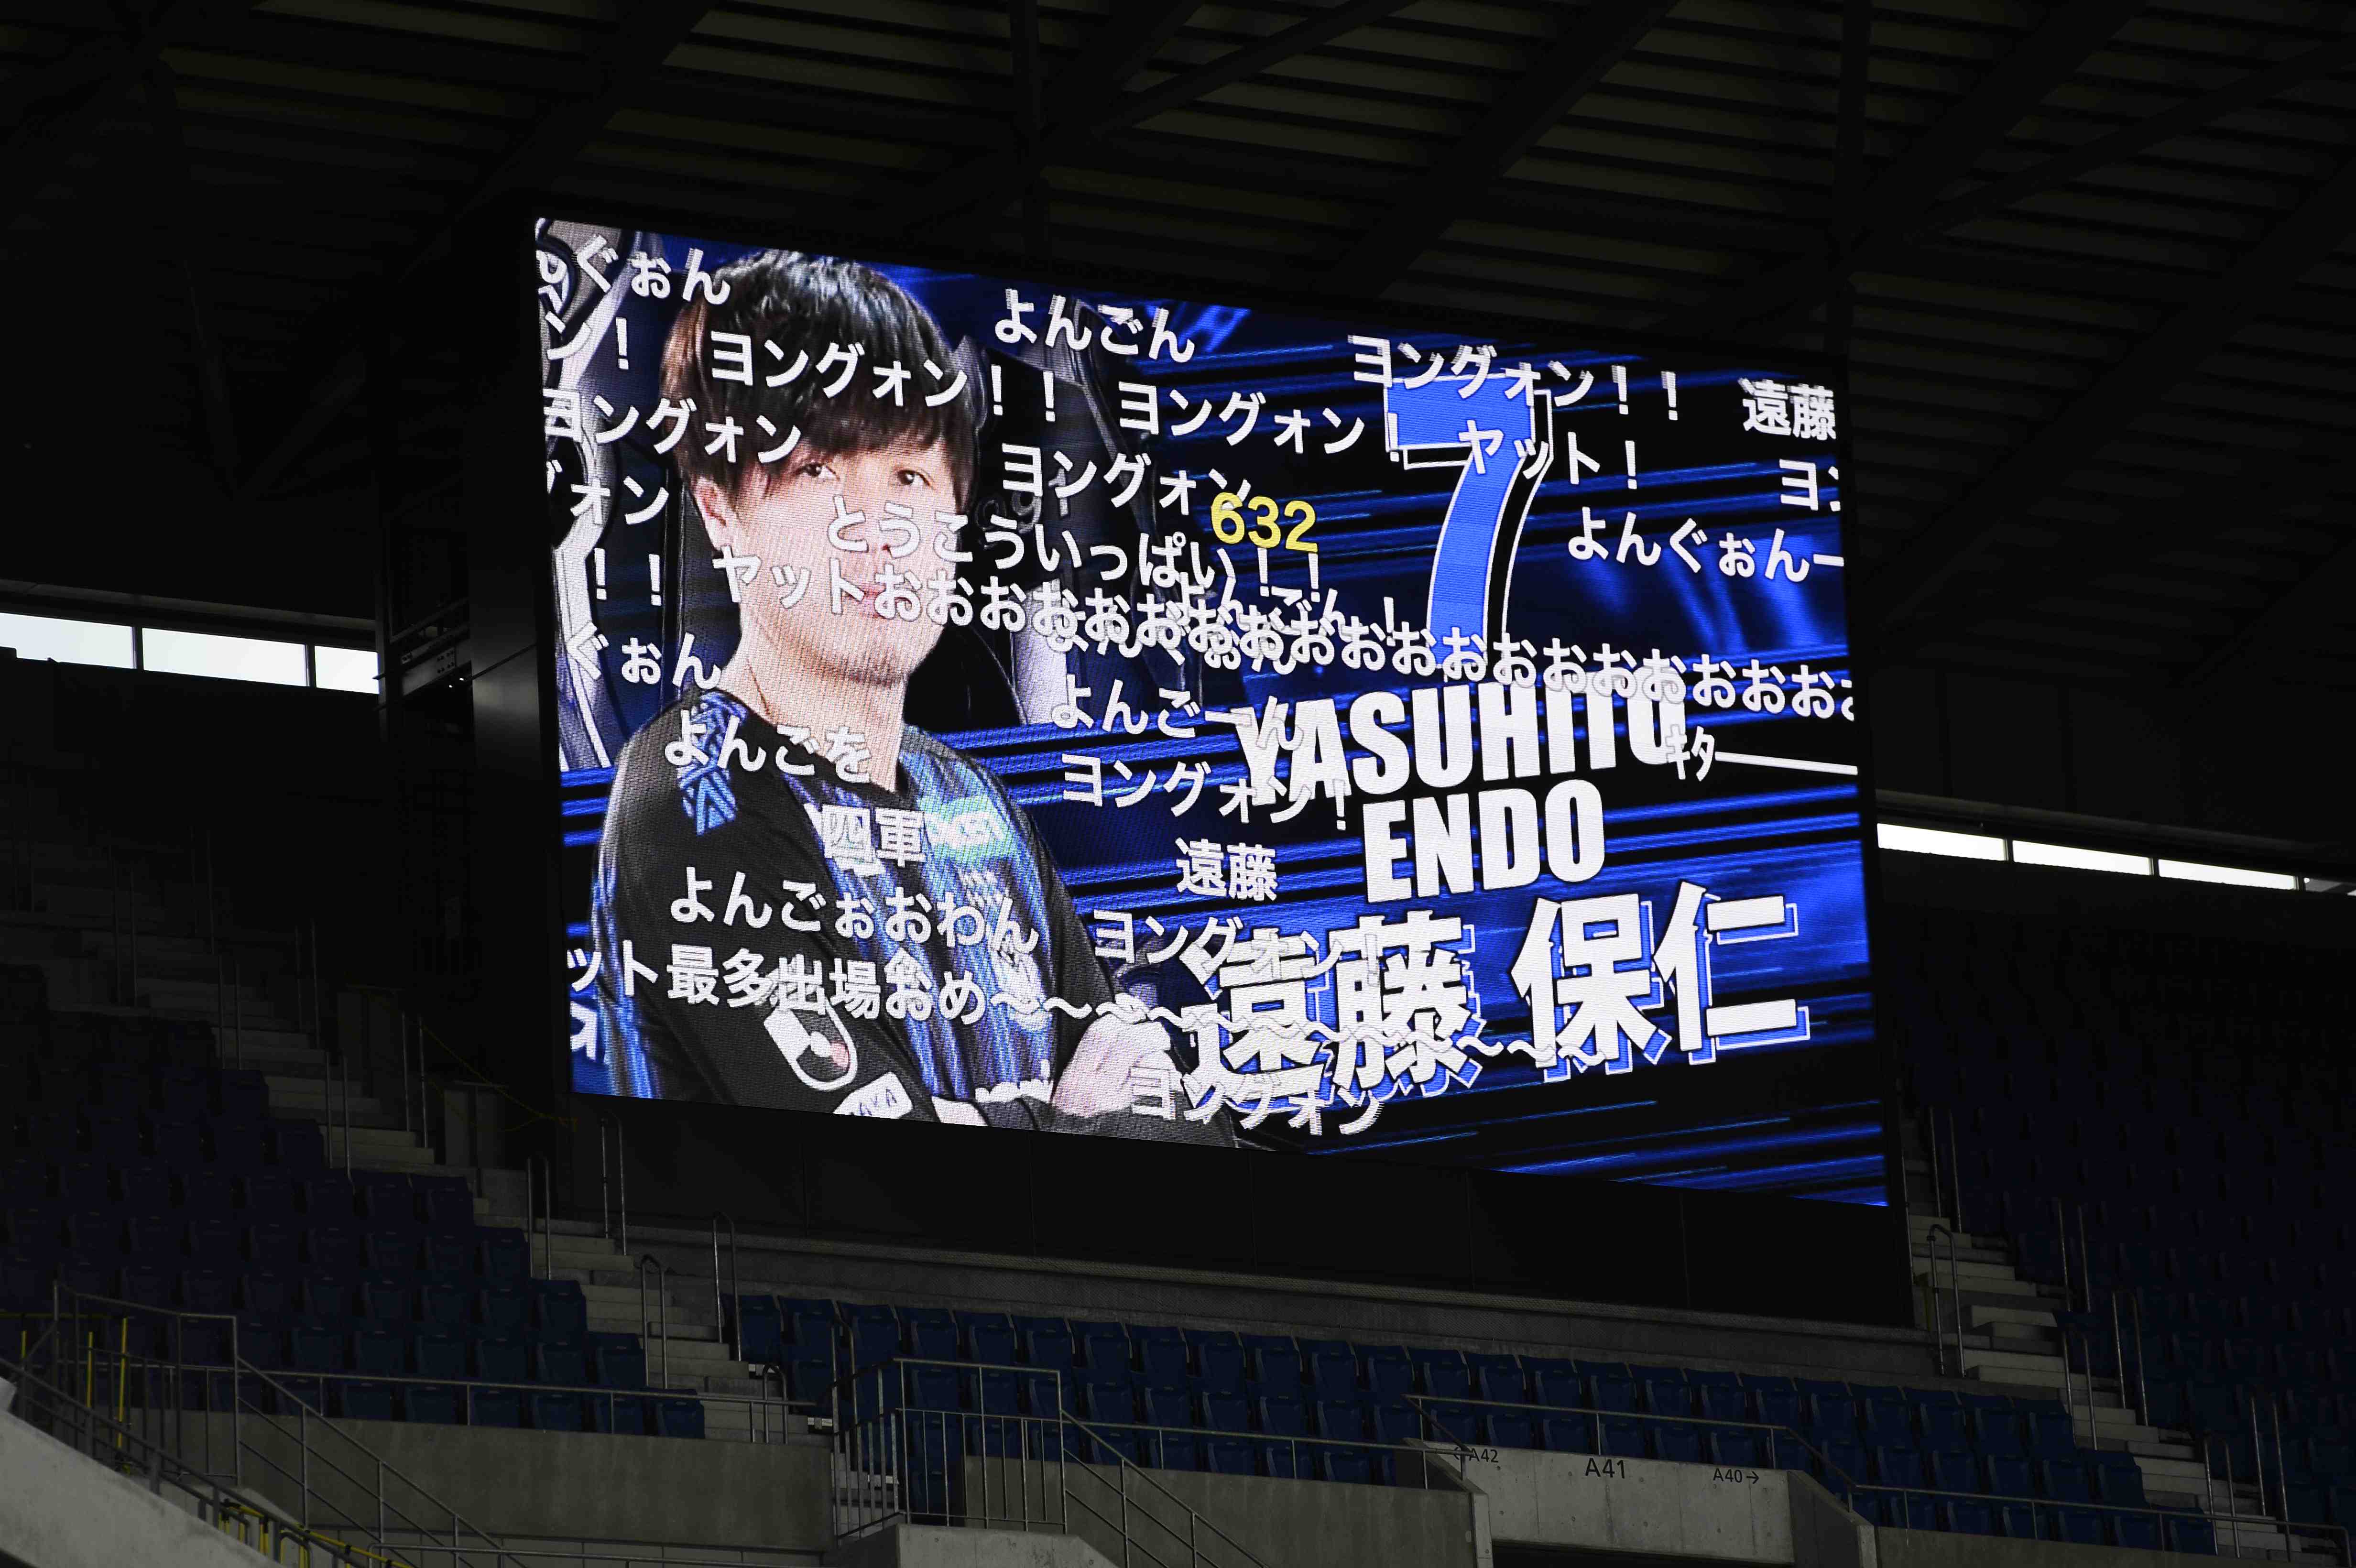 Japan Soccer Gamba Osaka midfielder Yasuhito Endo 002